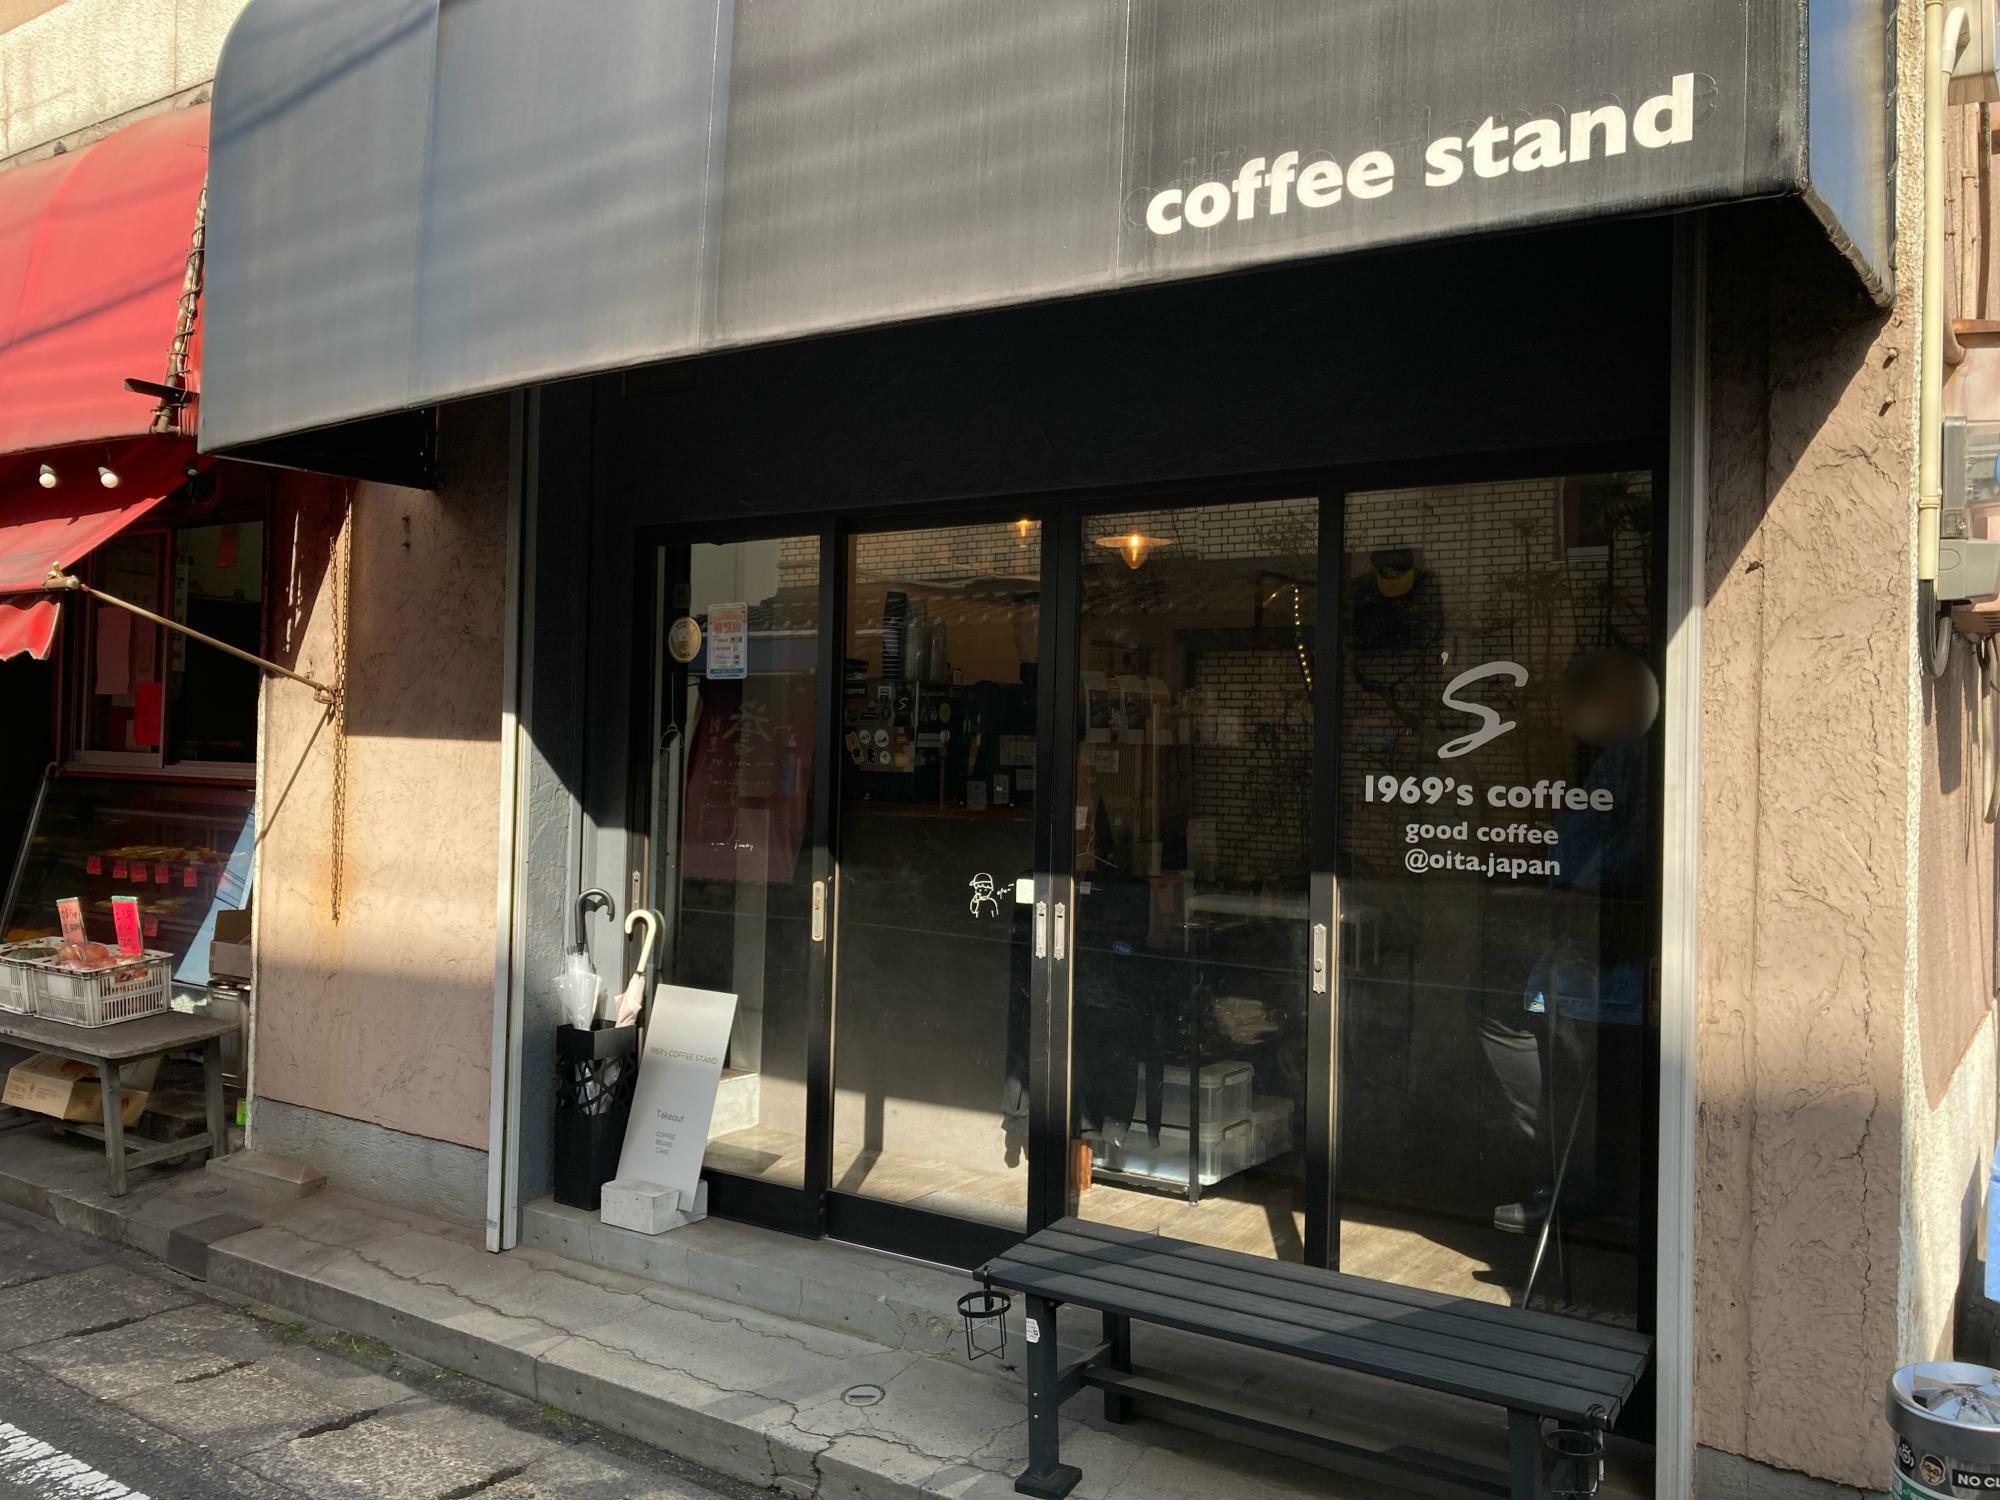 1969’s coffee stand